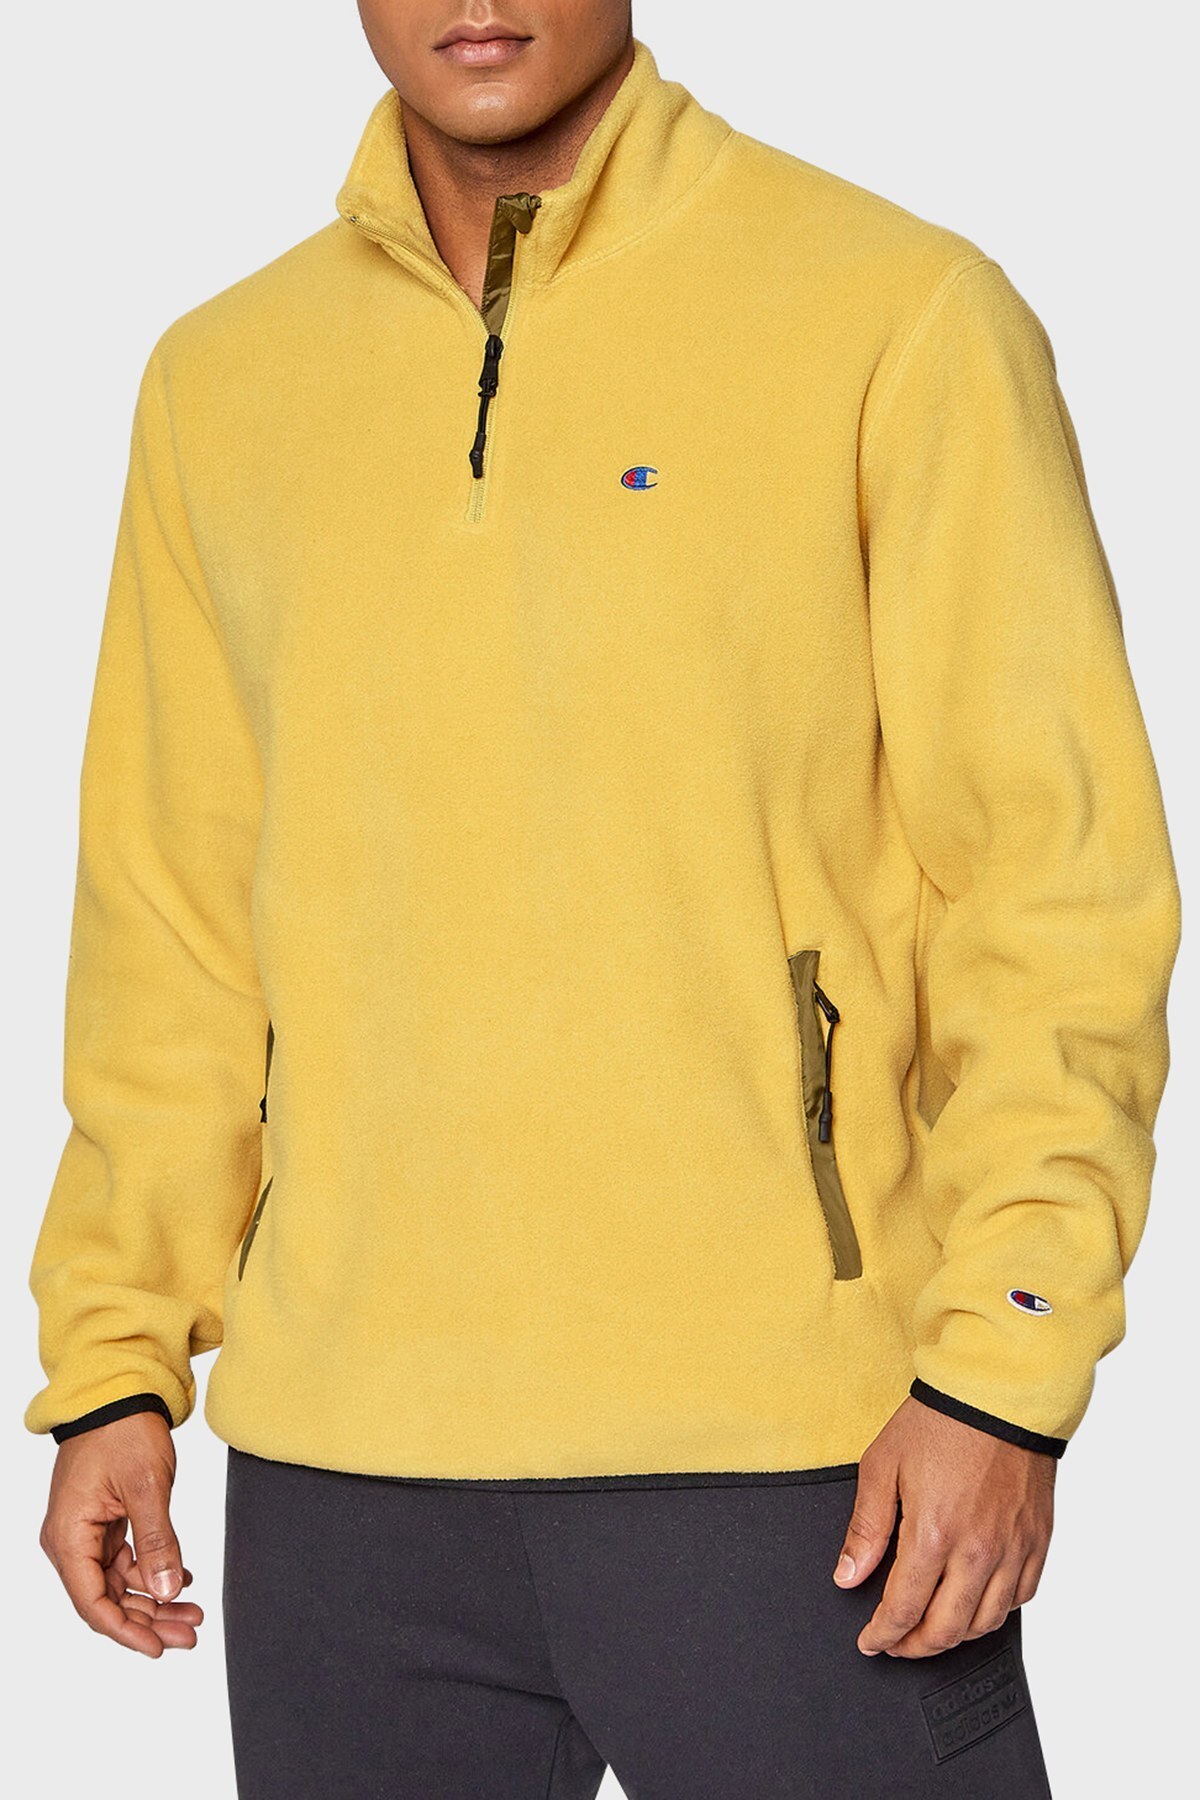 discount 77% Yellow 74                  EU KIDS FASHION Jumpers & Sweatshirts Hoodless Zeeman sweatshirt 